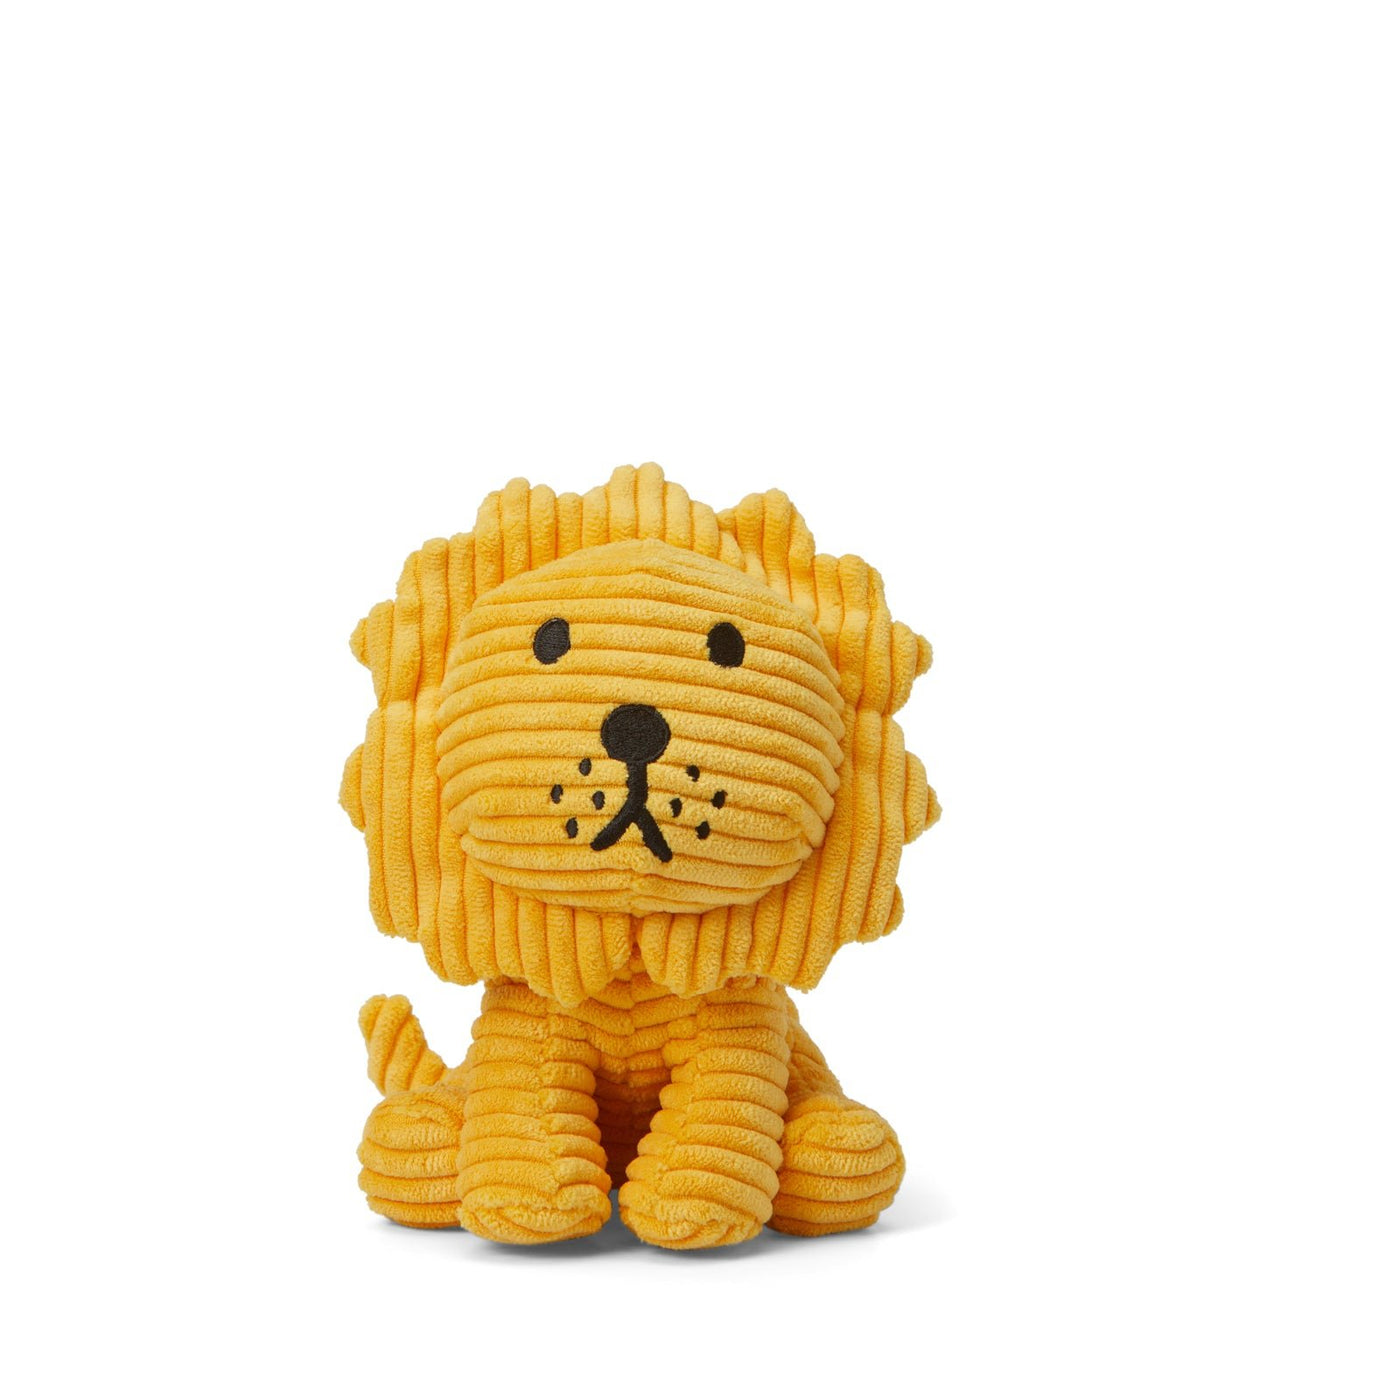 Bon Ton Toys Lion/Löwe Curduroy/Cord in Yellow/Gelb wahlweise klein ca. 17cm & groß 24cm - Bitangel RENOVATE & FURNISH HOMES GmbH